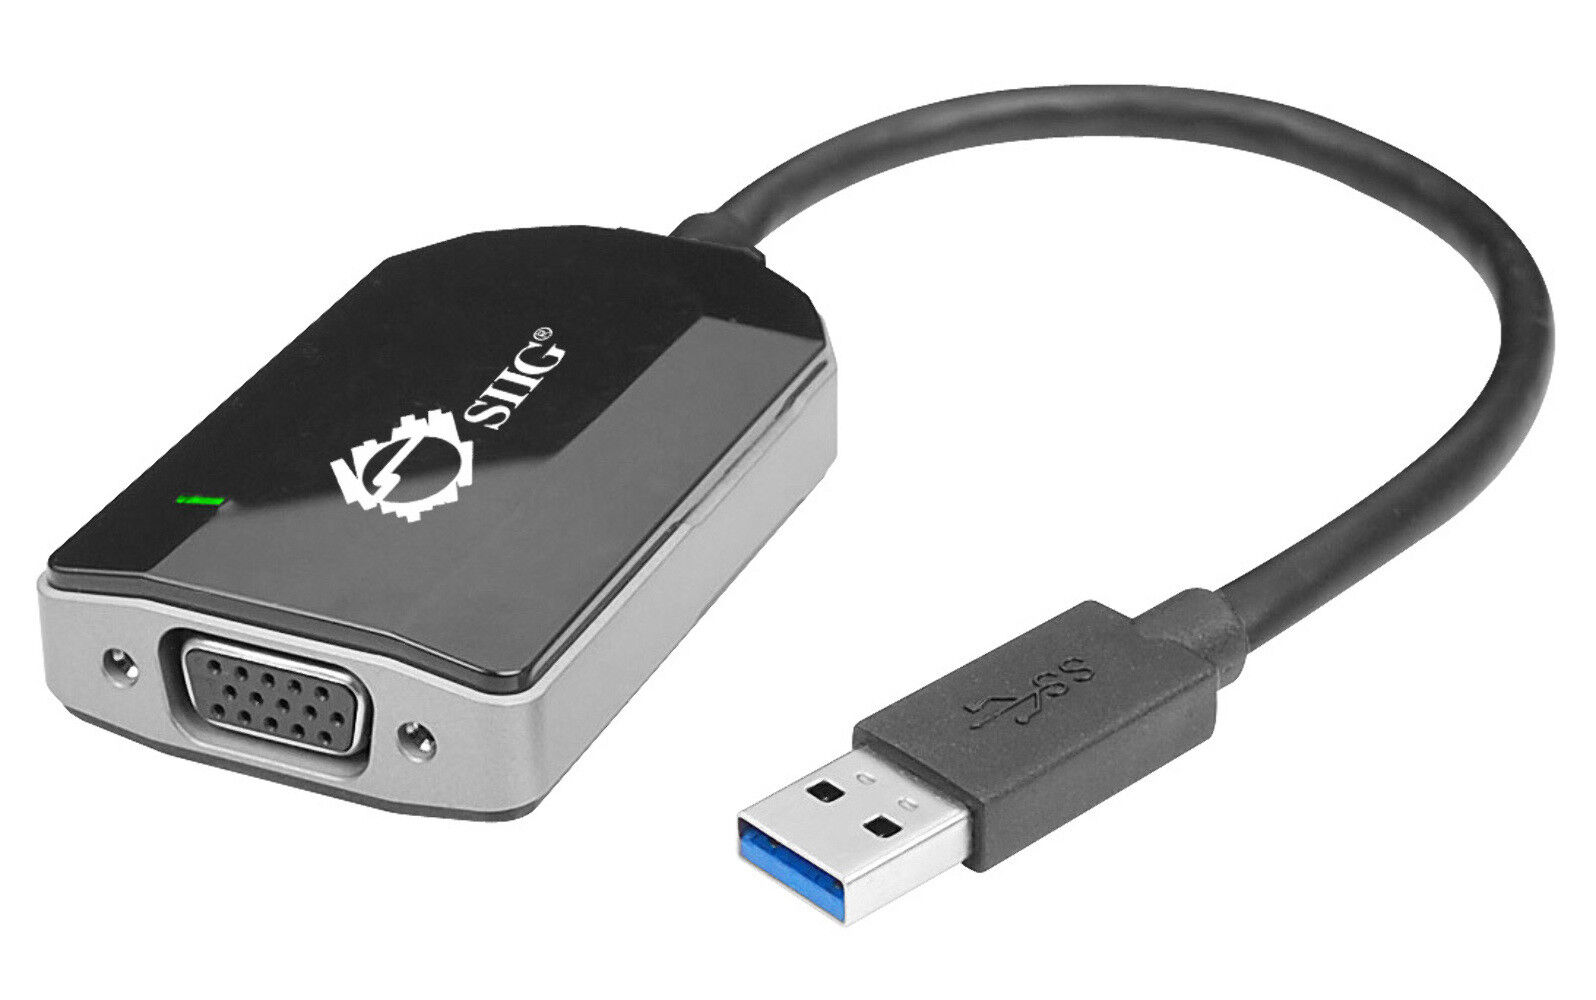 SIIG USB 3.0 to VGA Multi Monitor Video Adapter (JU-VG0211-S1)